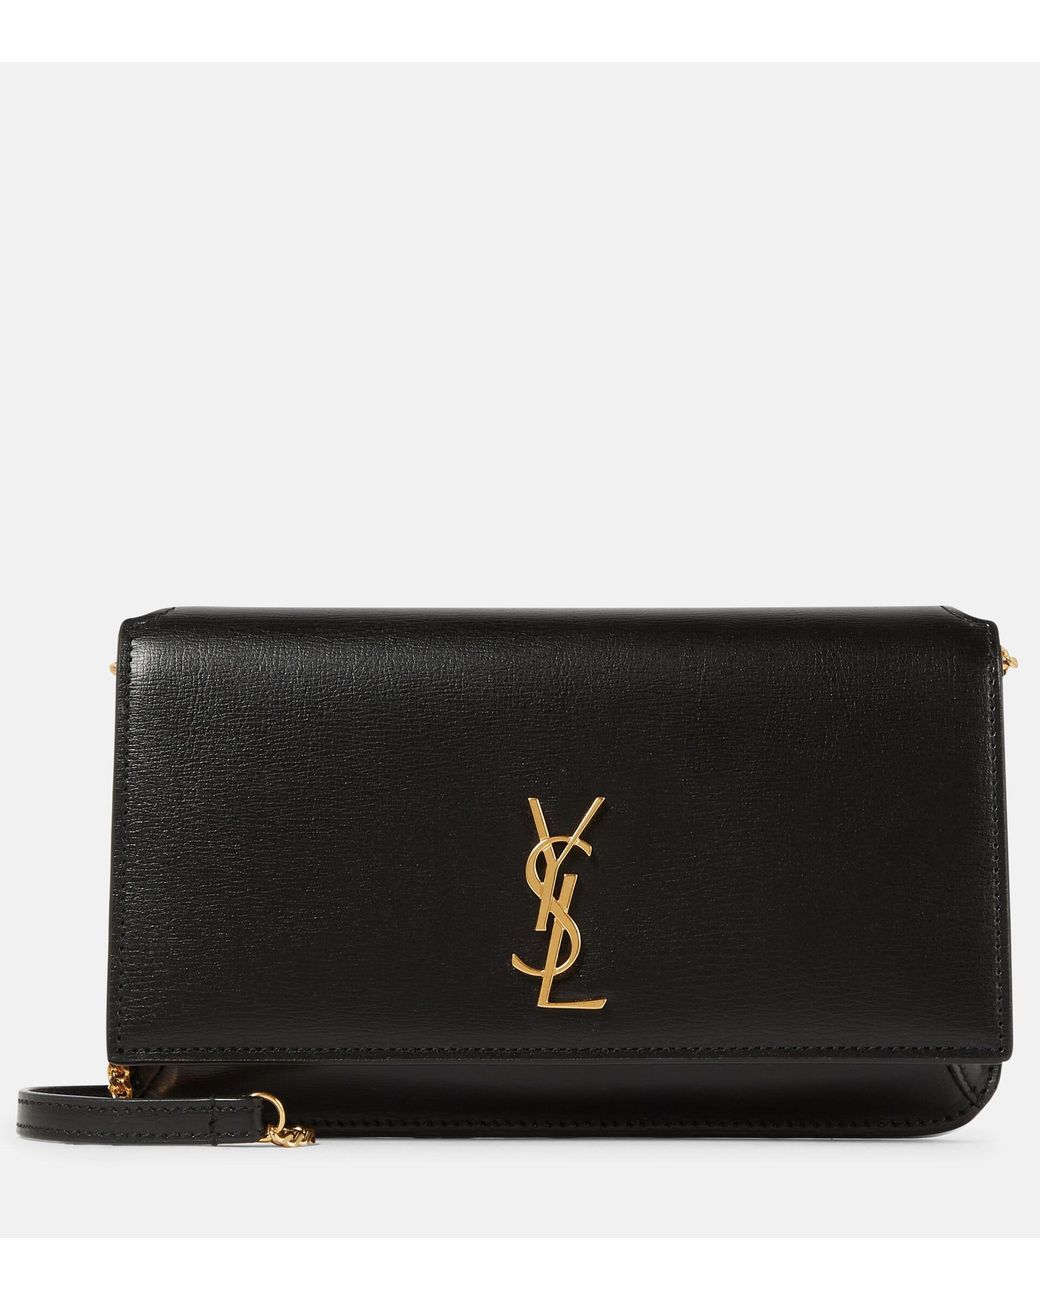 Saint Laurent Cassandre Leather Iphone Shoulder Bag in Black | Lyst